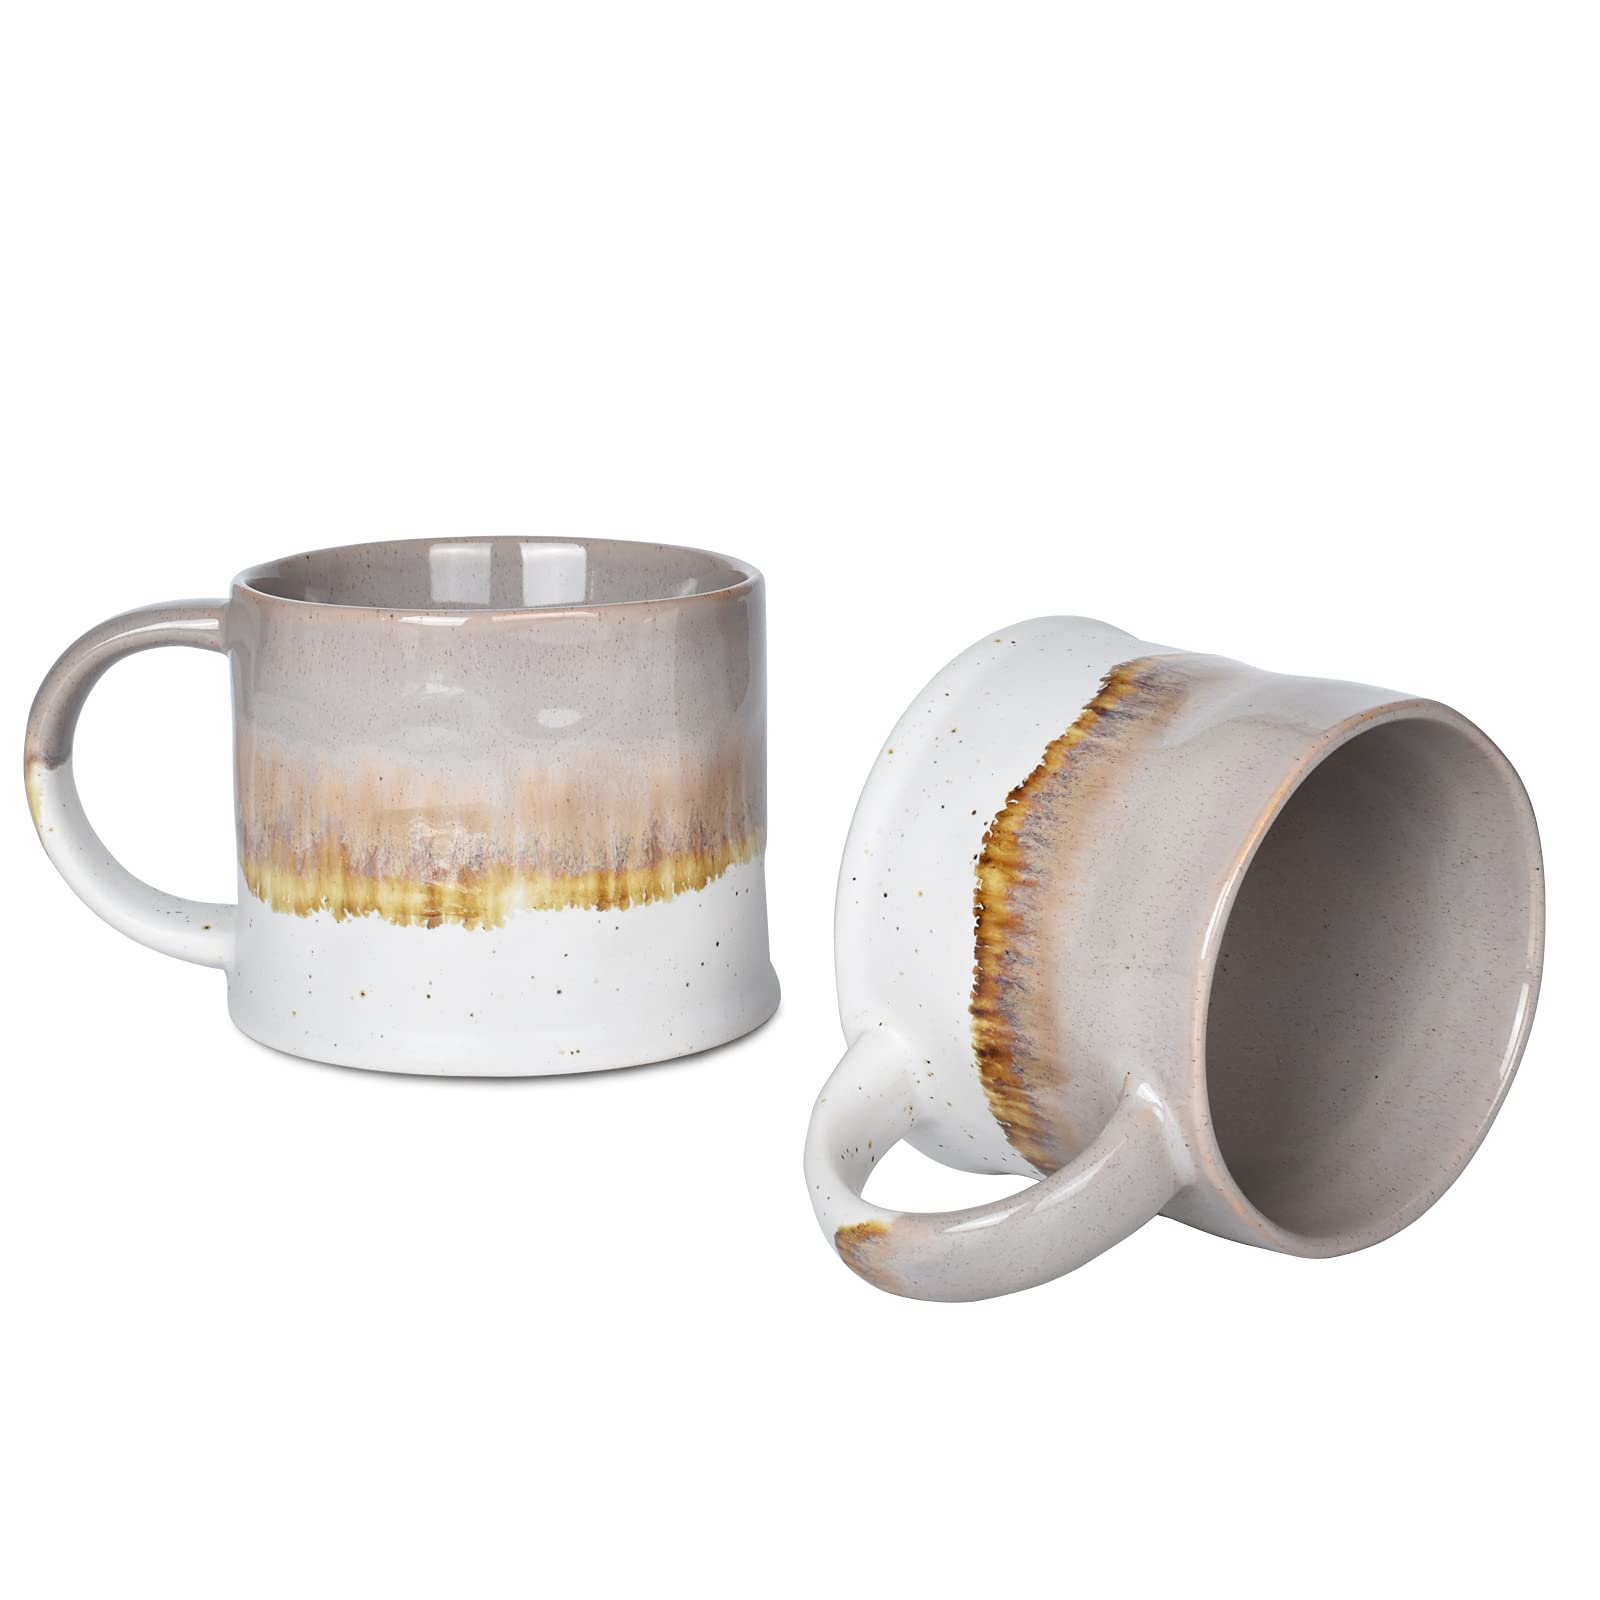 Large Stoneware Coffee Mug Big Tea Cup